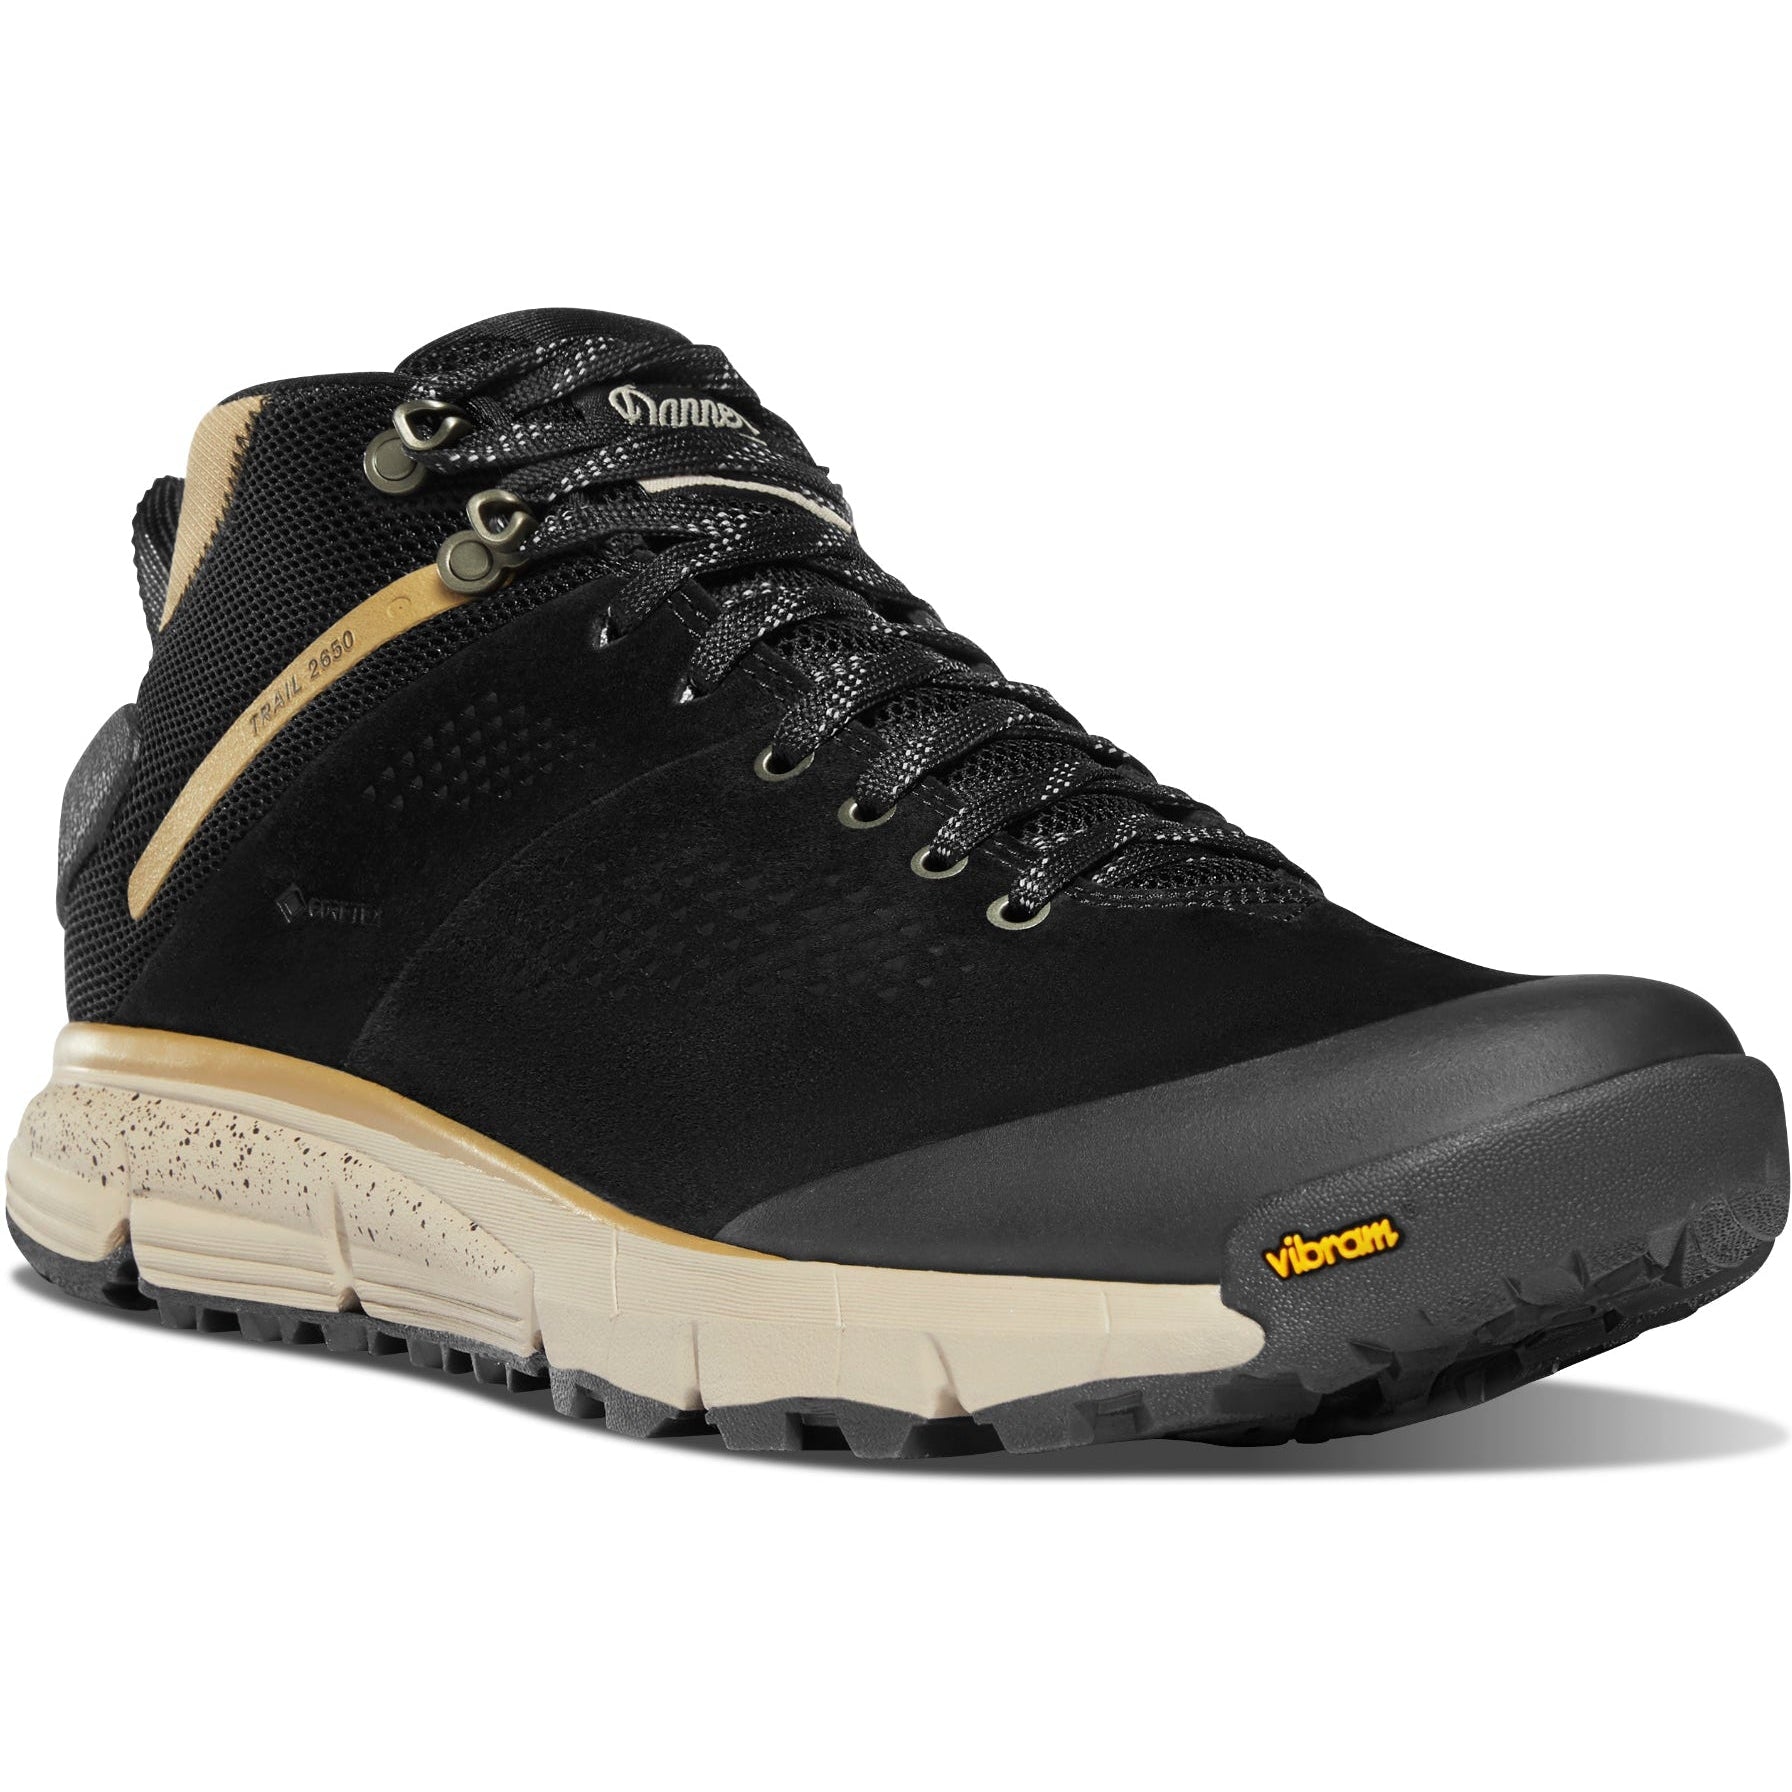 Danner Men's Trail 2650 GTX Mid 4" WP Hiking Shoe - Black - 61248 7 / Medium / Black - Overlook Boots